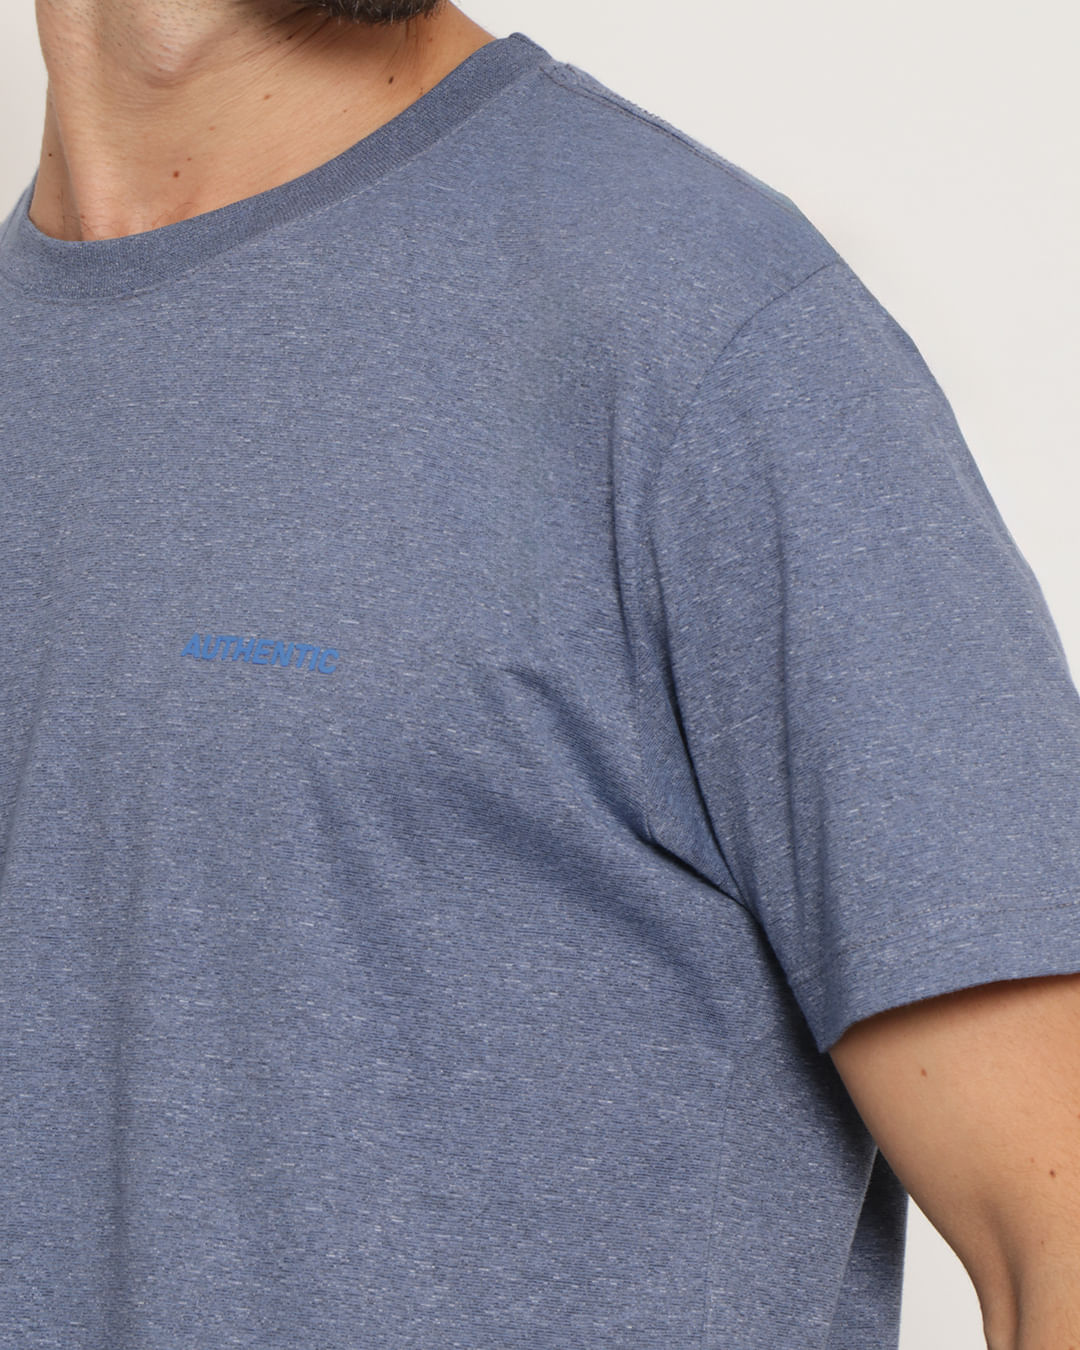 Camiseta-Tt600-Pretoazul-Pgg---Azul-Medio